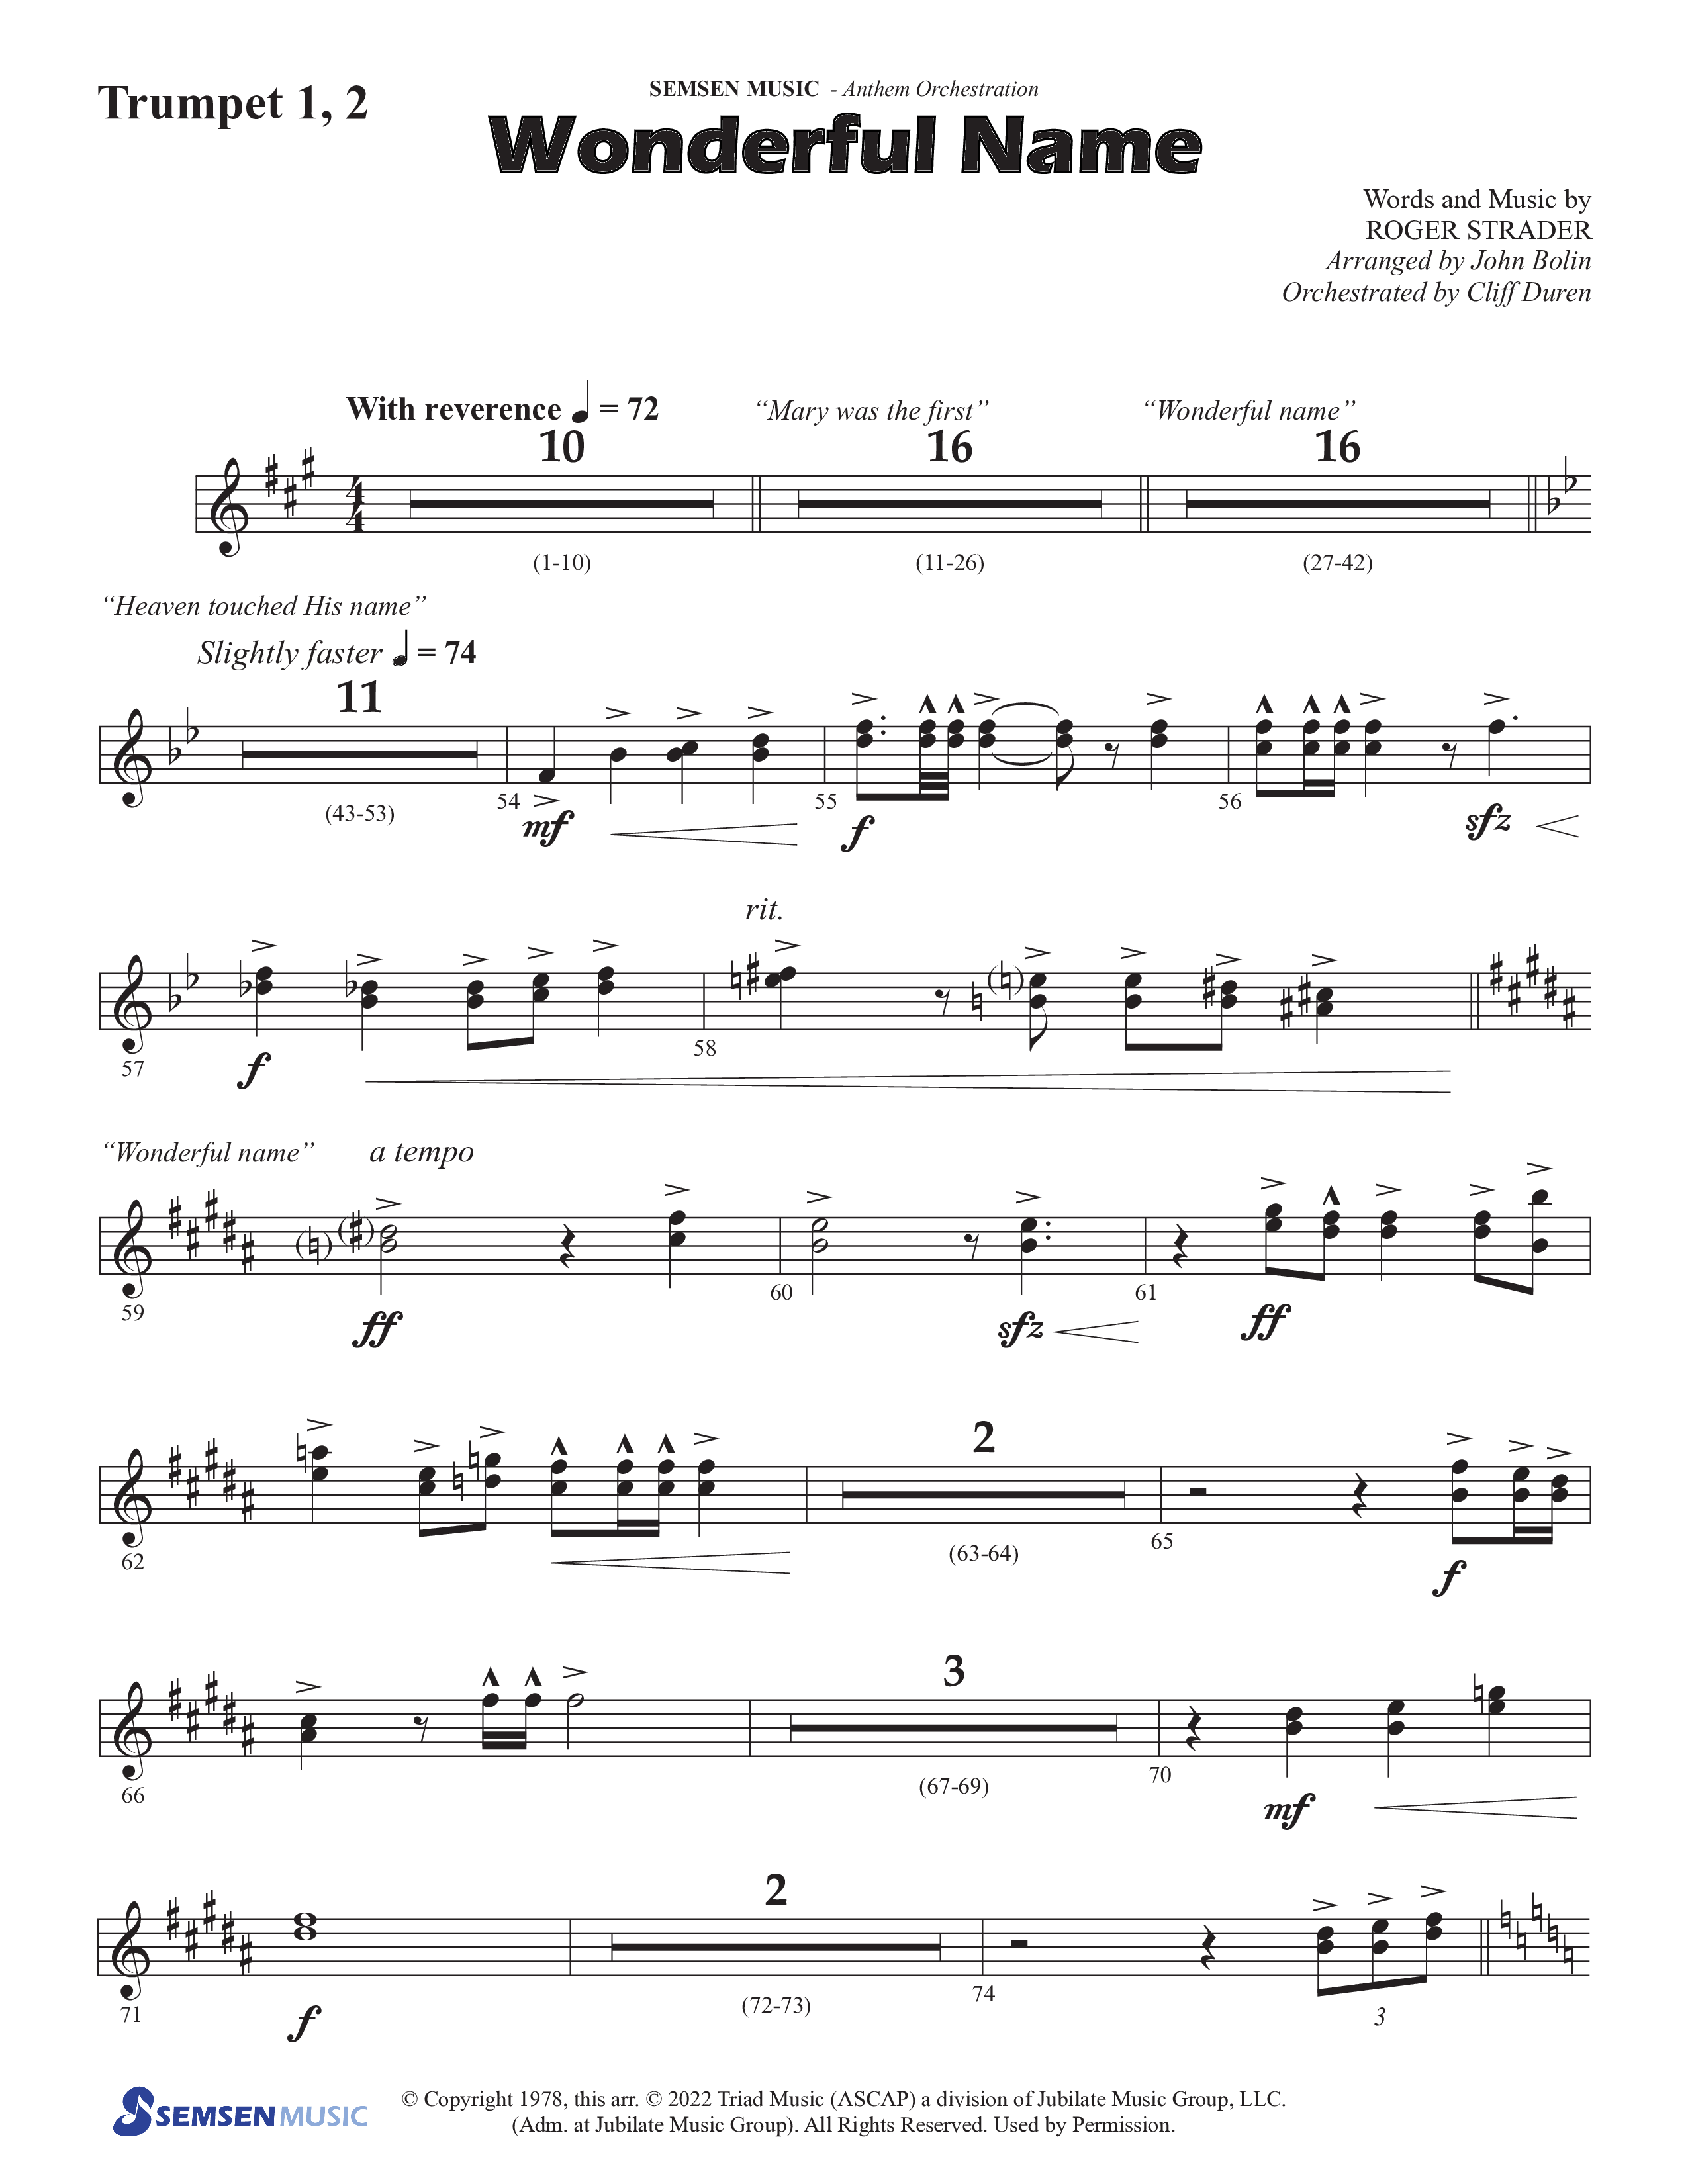 Wonderful Name (Choral Anthem SATB) Trumpet 1,2 (Semsen Music / Arr. John Bolin / Orch. Cliff Duren)